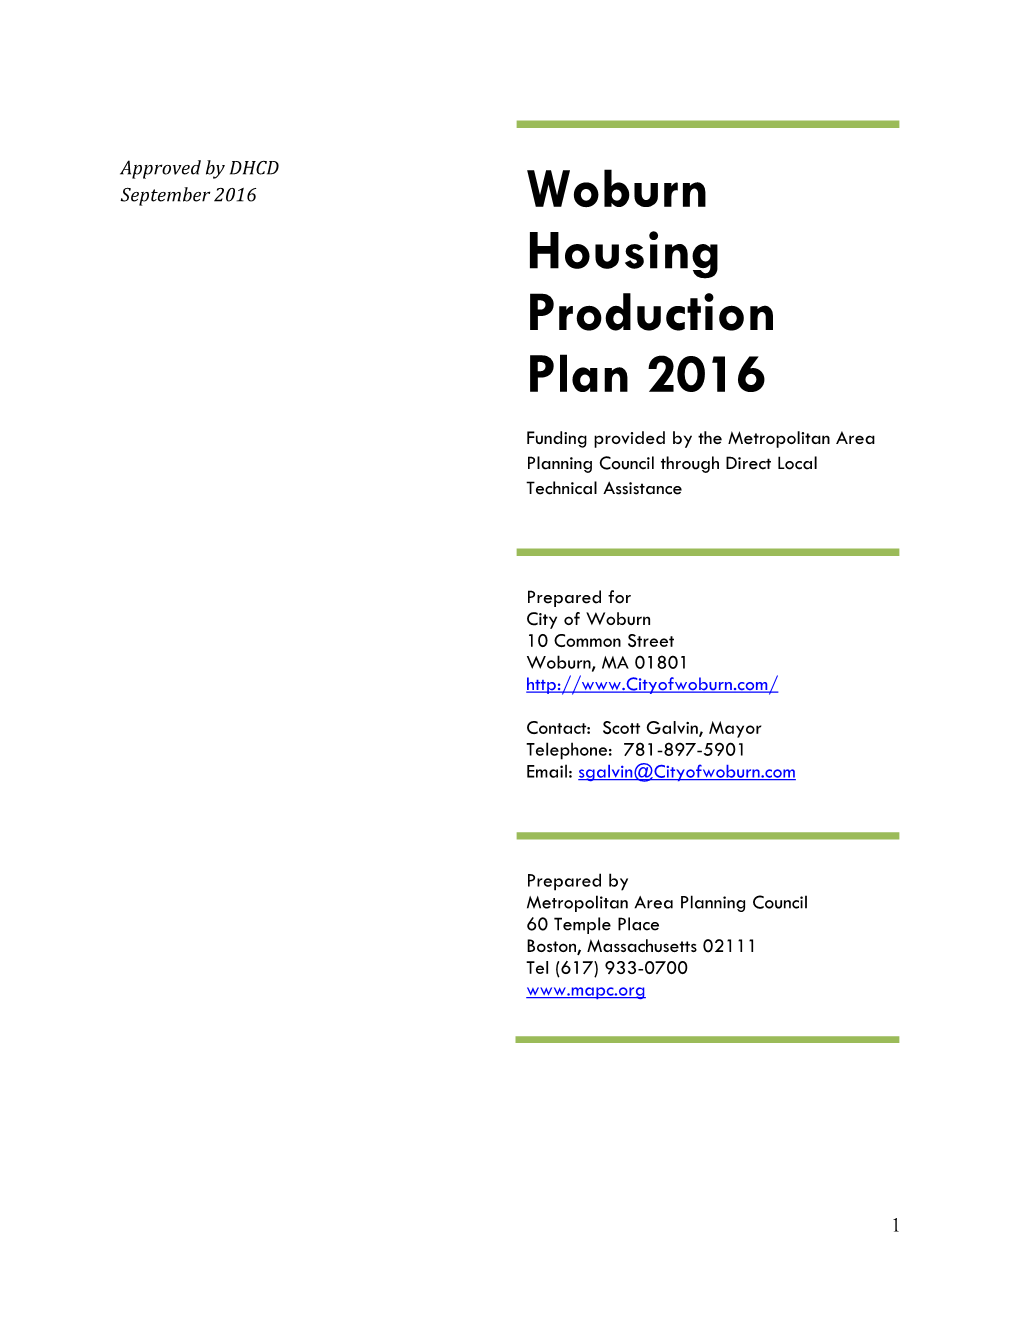 Woburn Housing Production Plan 2016